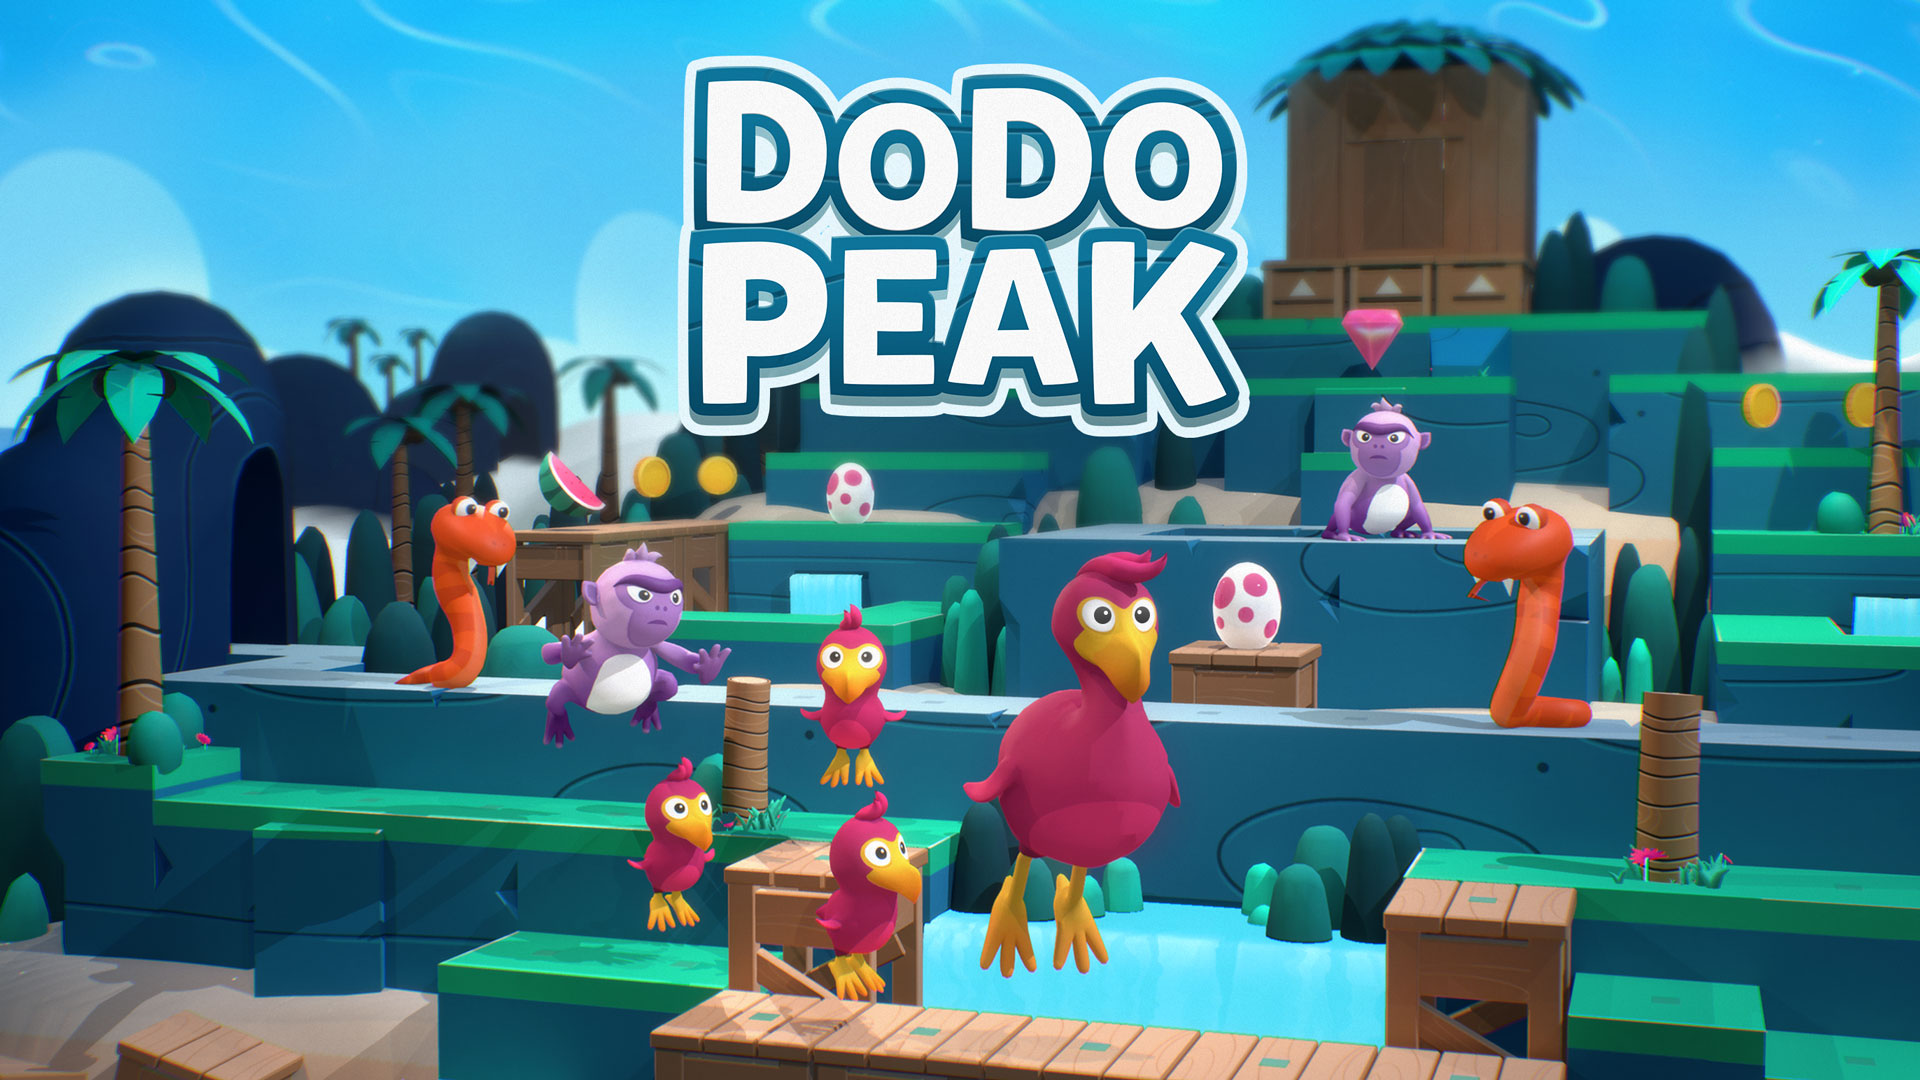 Dodo Peak - more footage